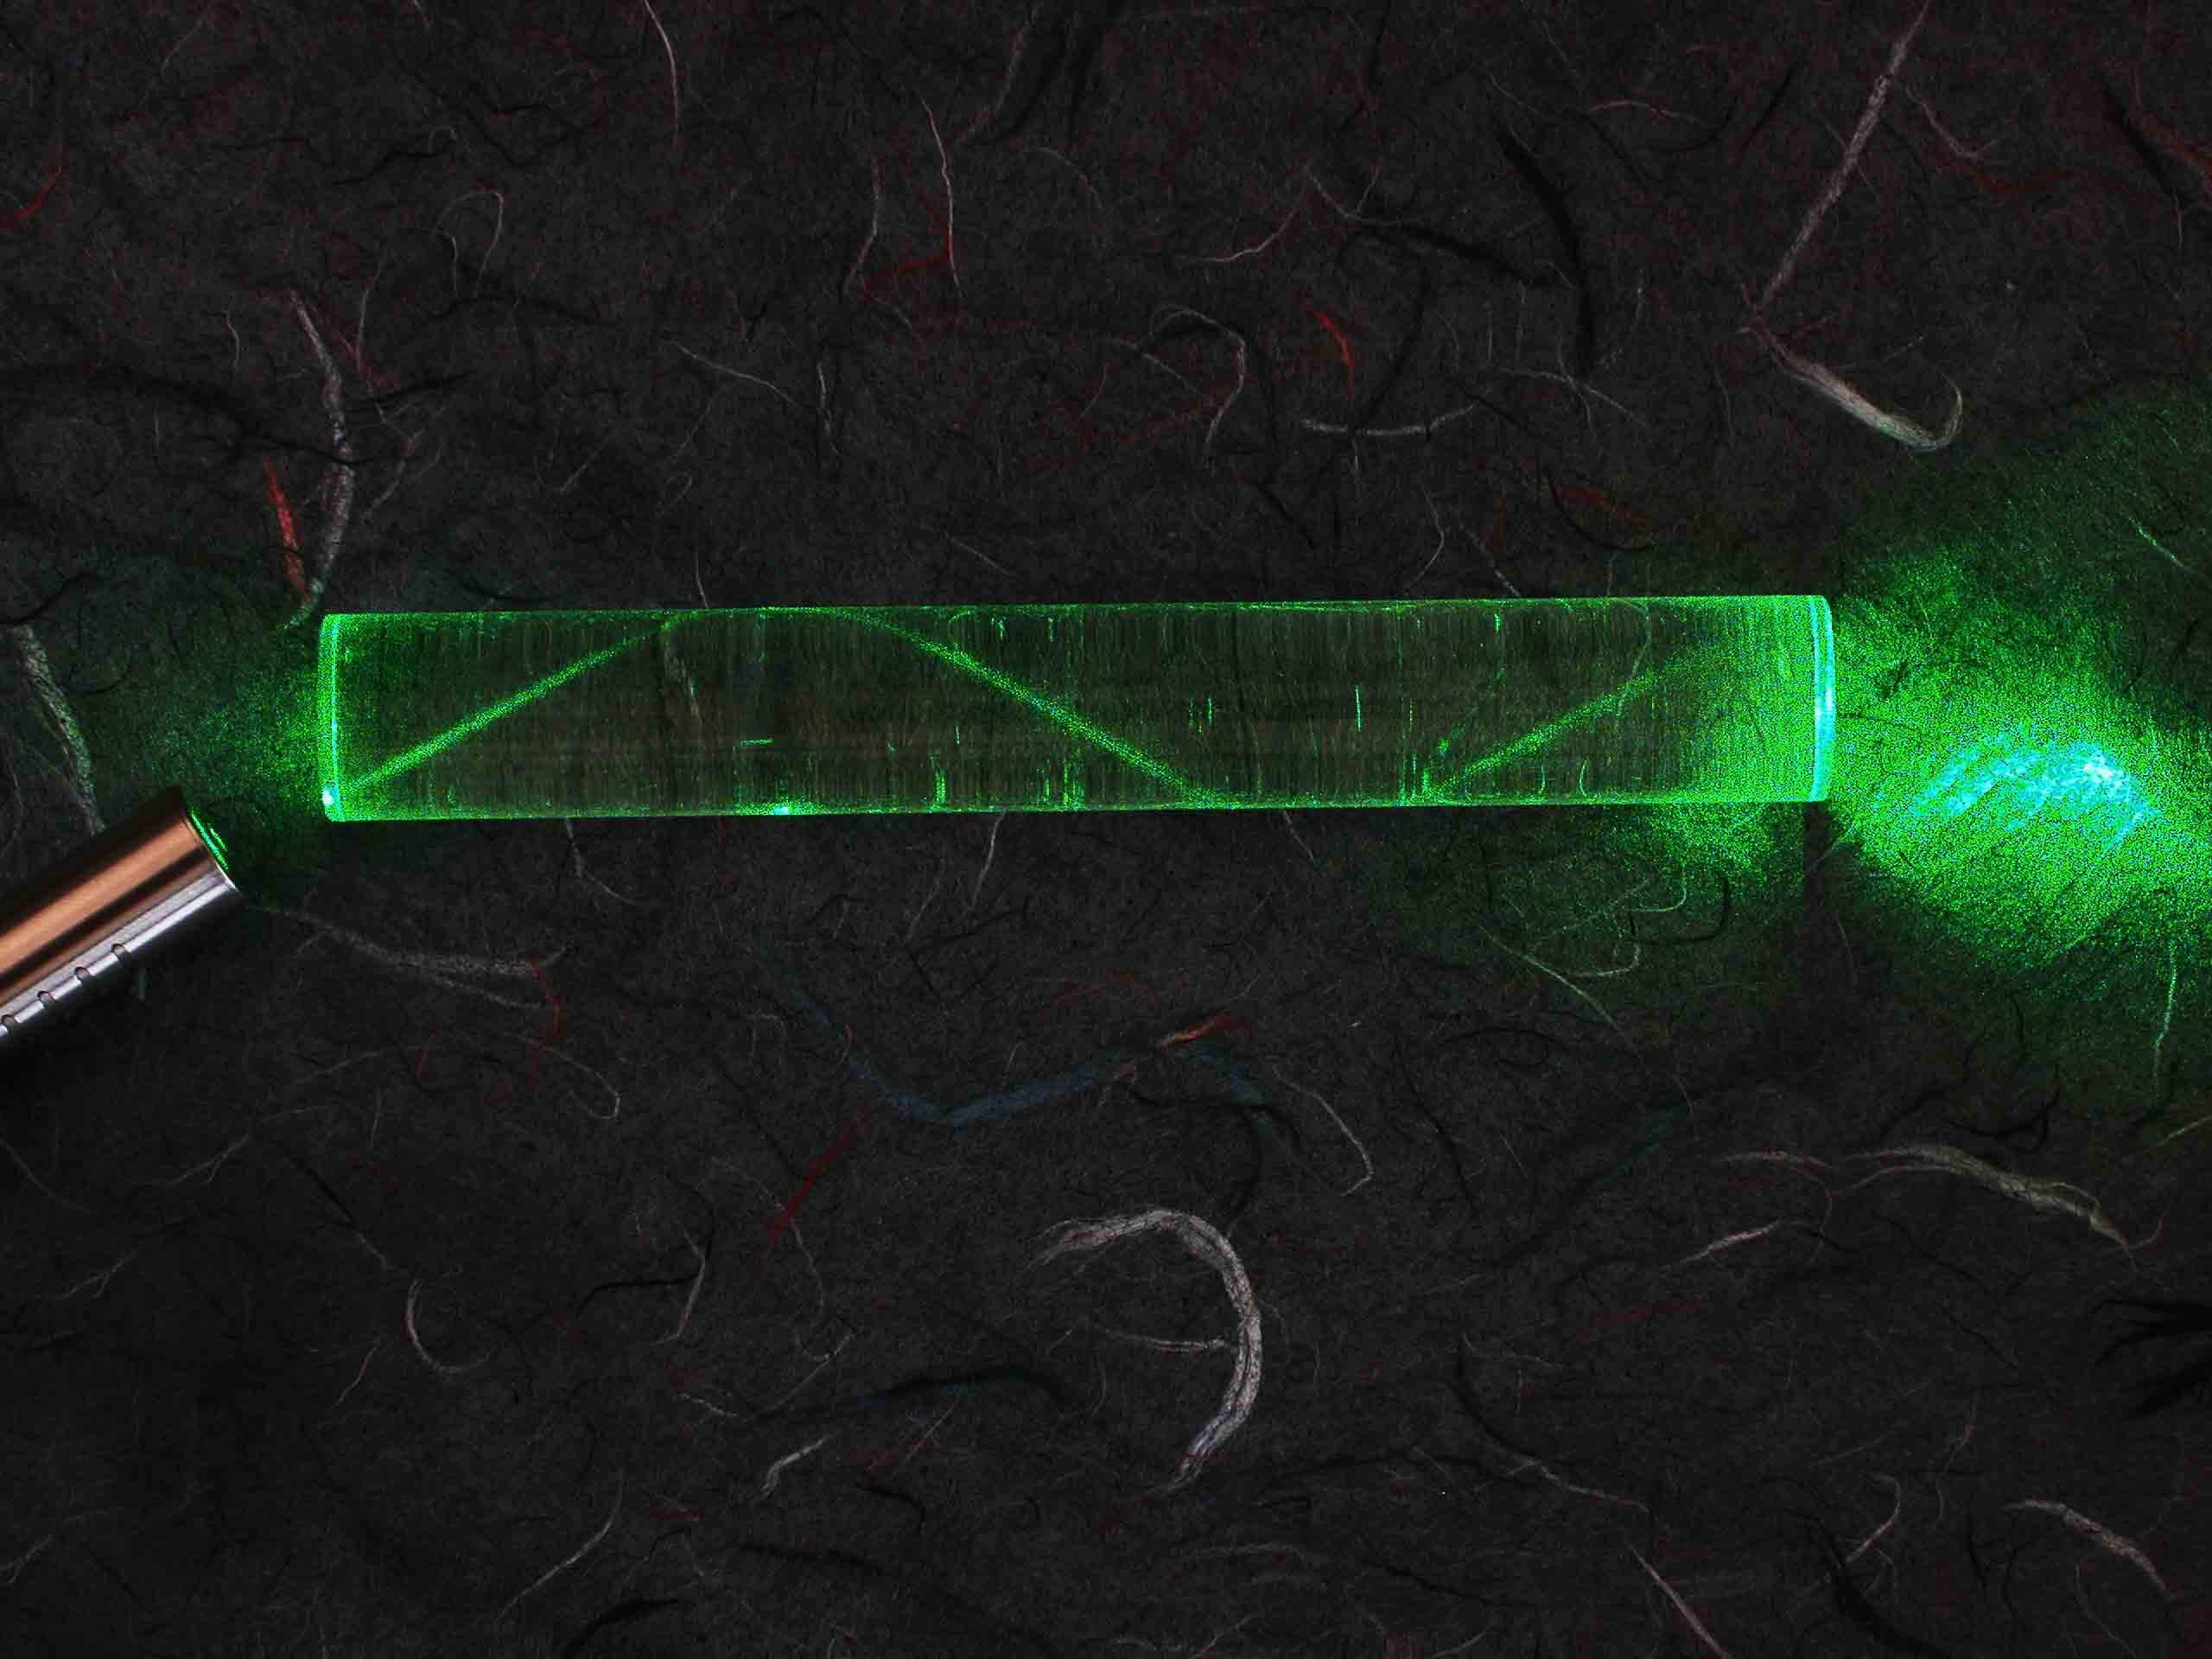 Scientists create record-breaking 10-petawatt laser that can vaporize matter